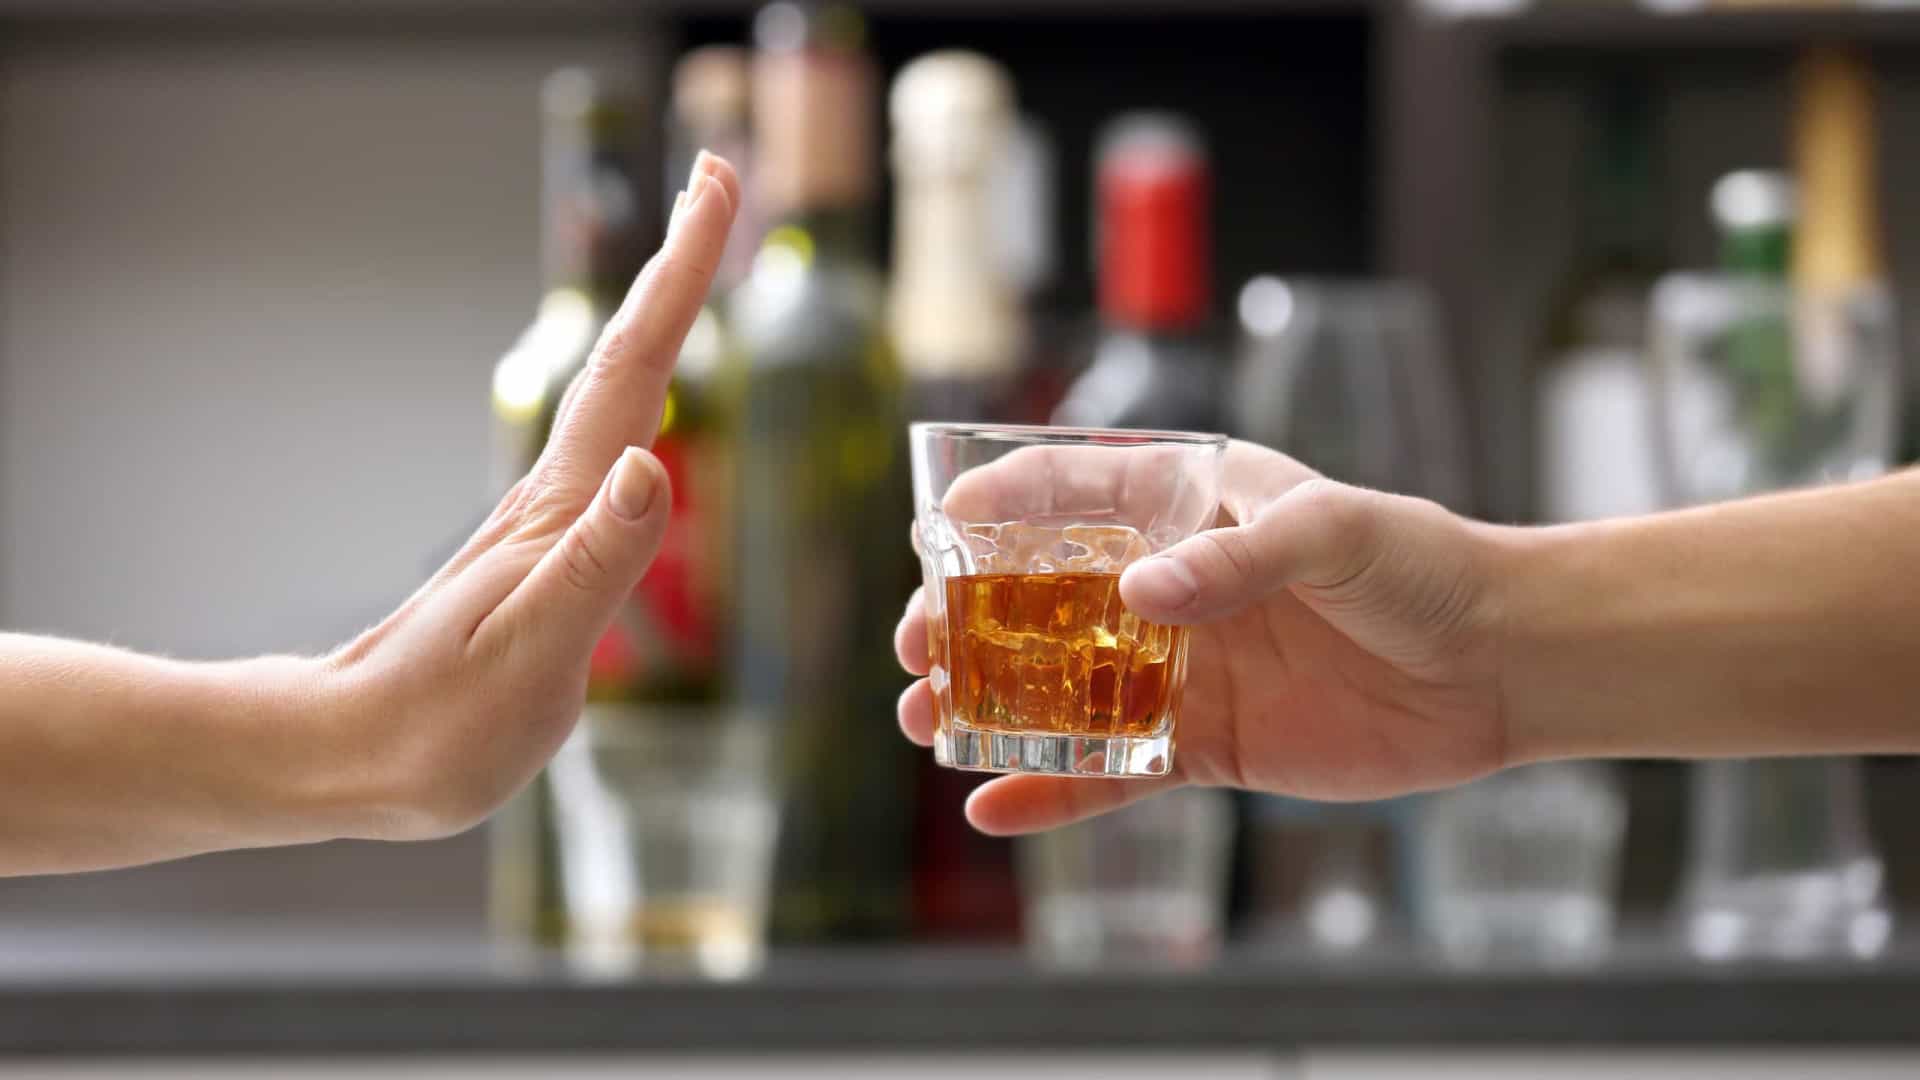 Estudo sobre cogumelo magico sugere que psilocibina pode reverter danos cerebrais causados pelo alcool